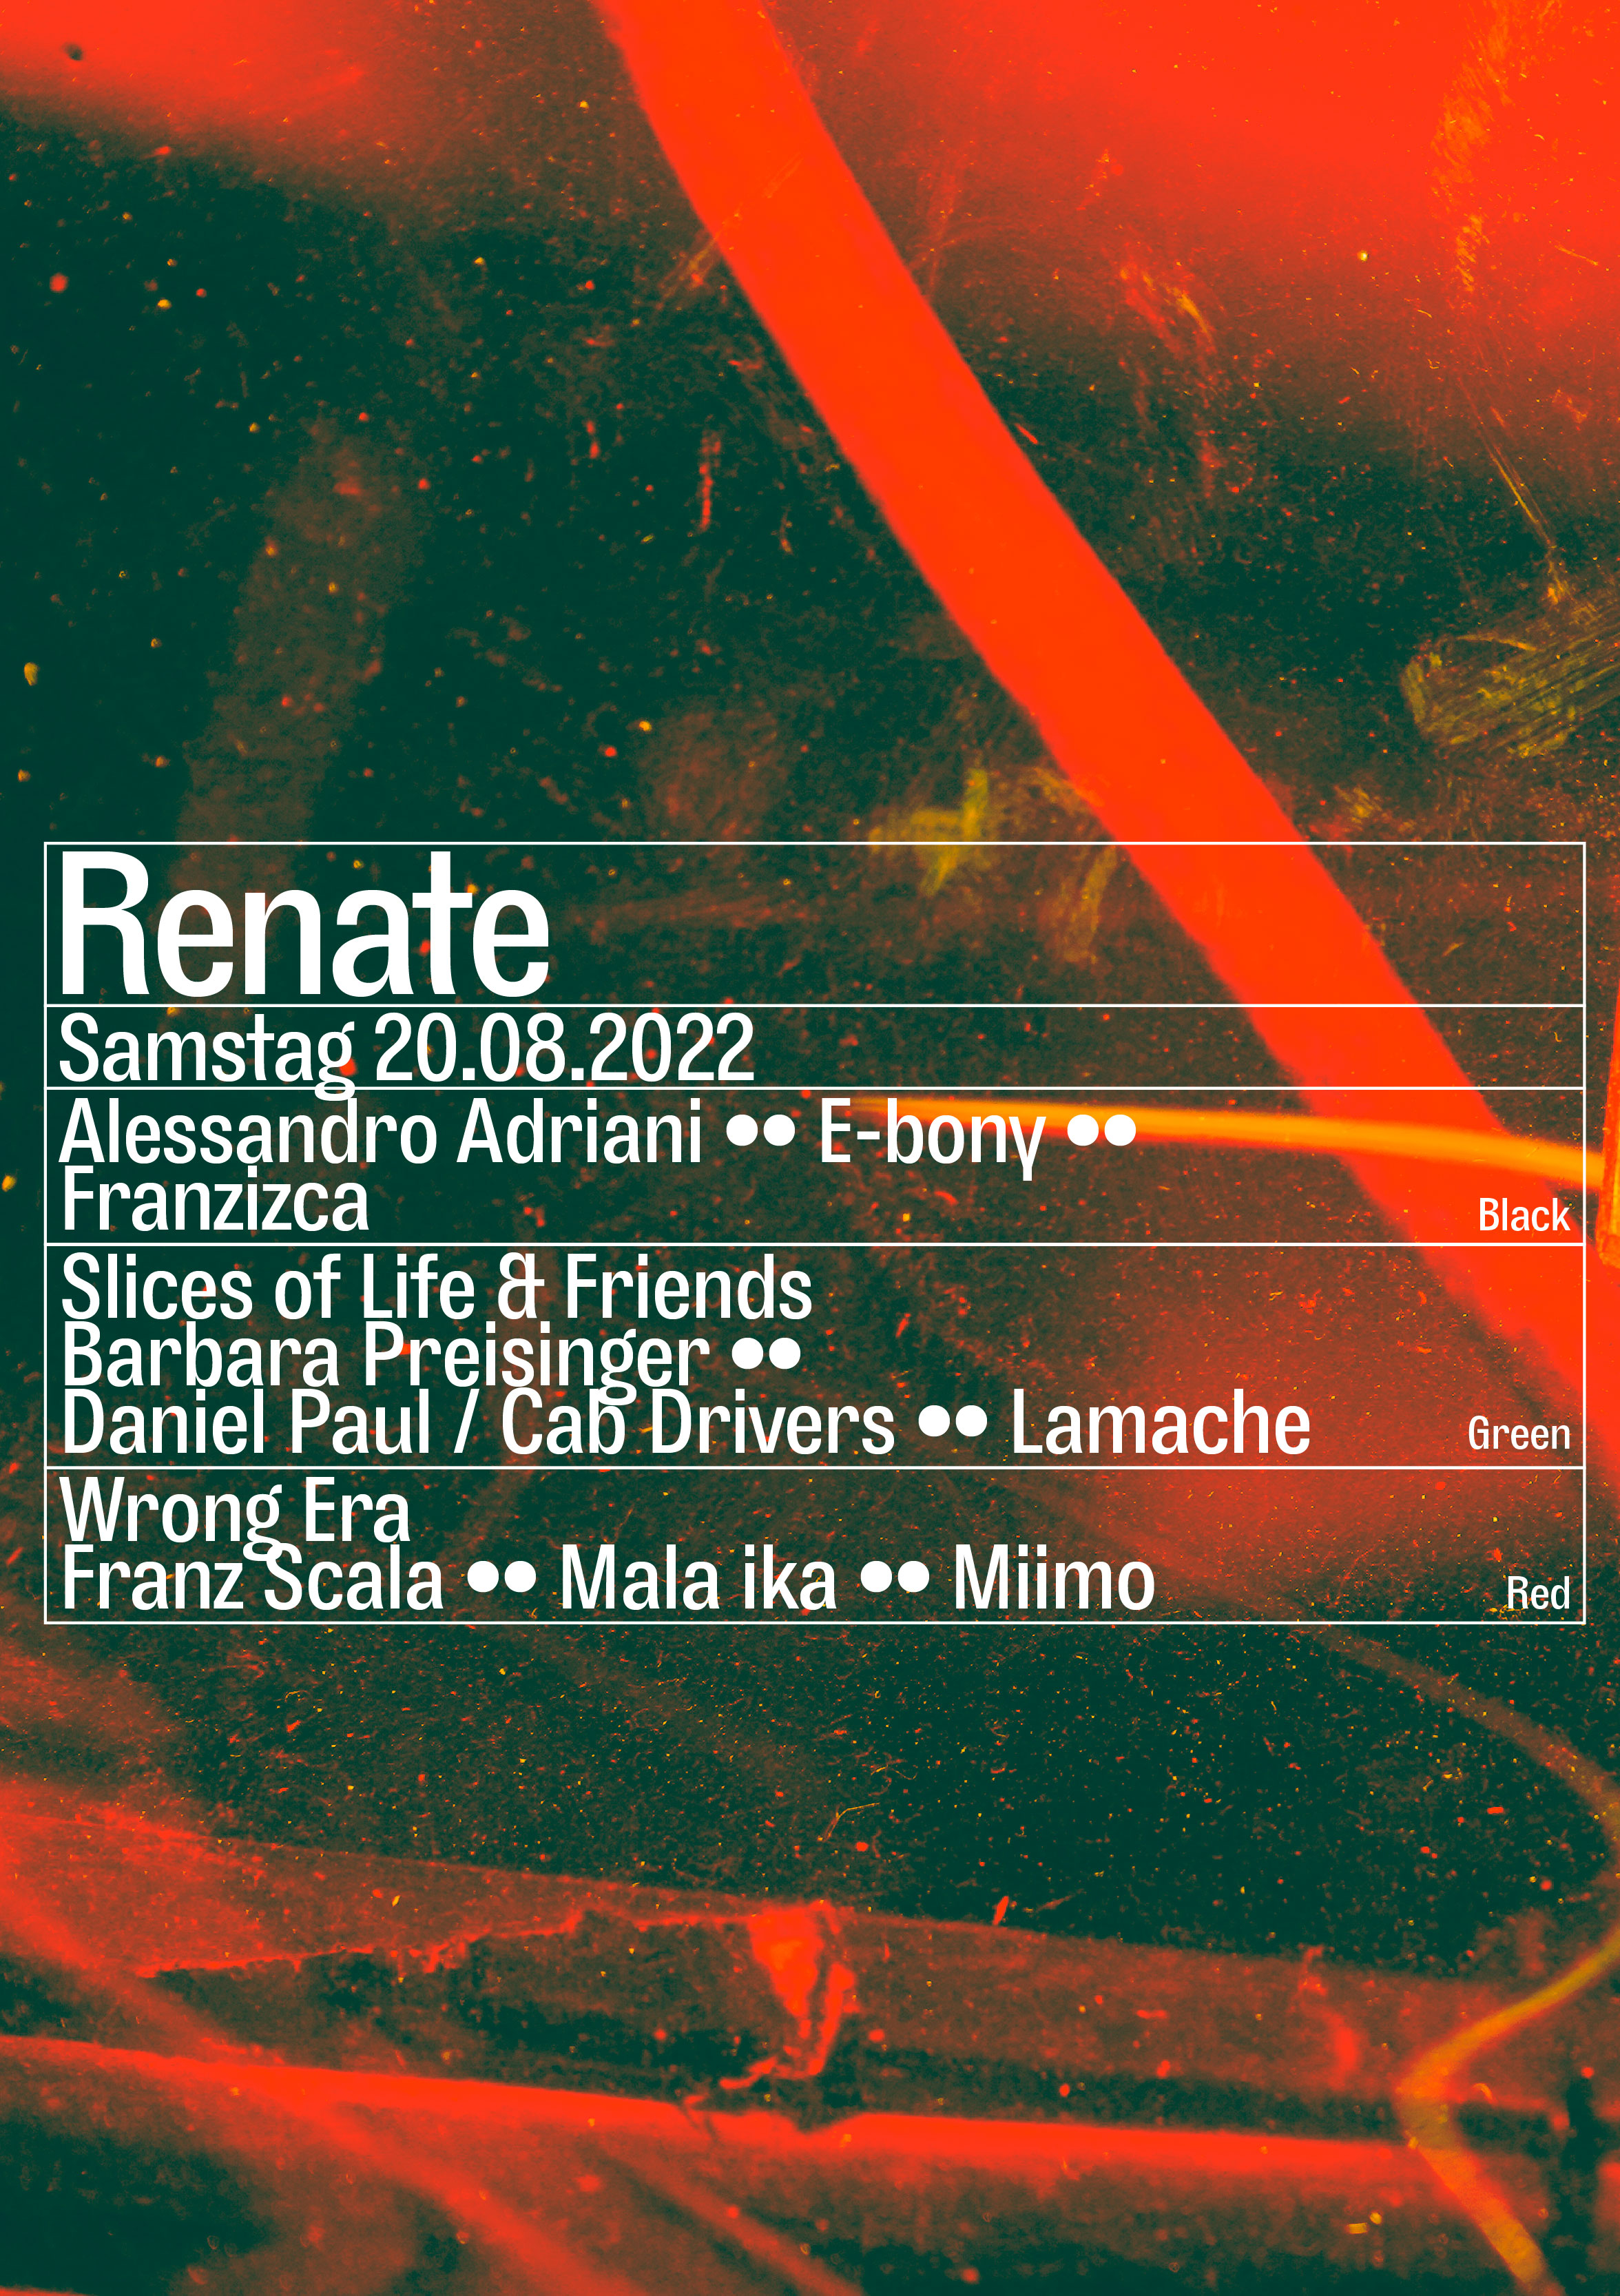 Renate with Alessandro Adriani, Barbara Preisinger, Lamache, Mala ika - Flyer front